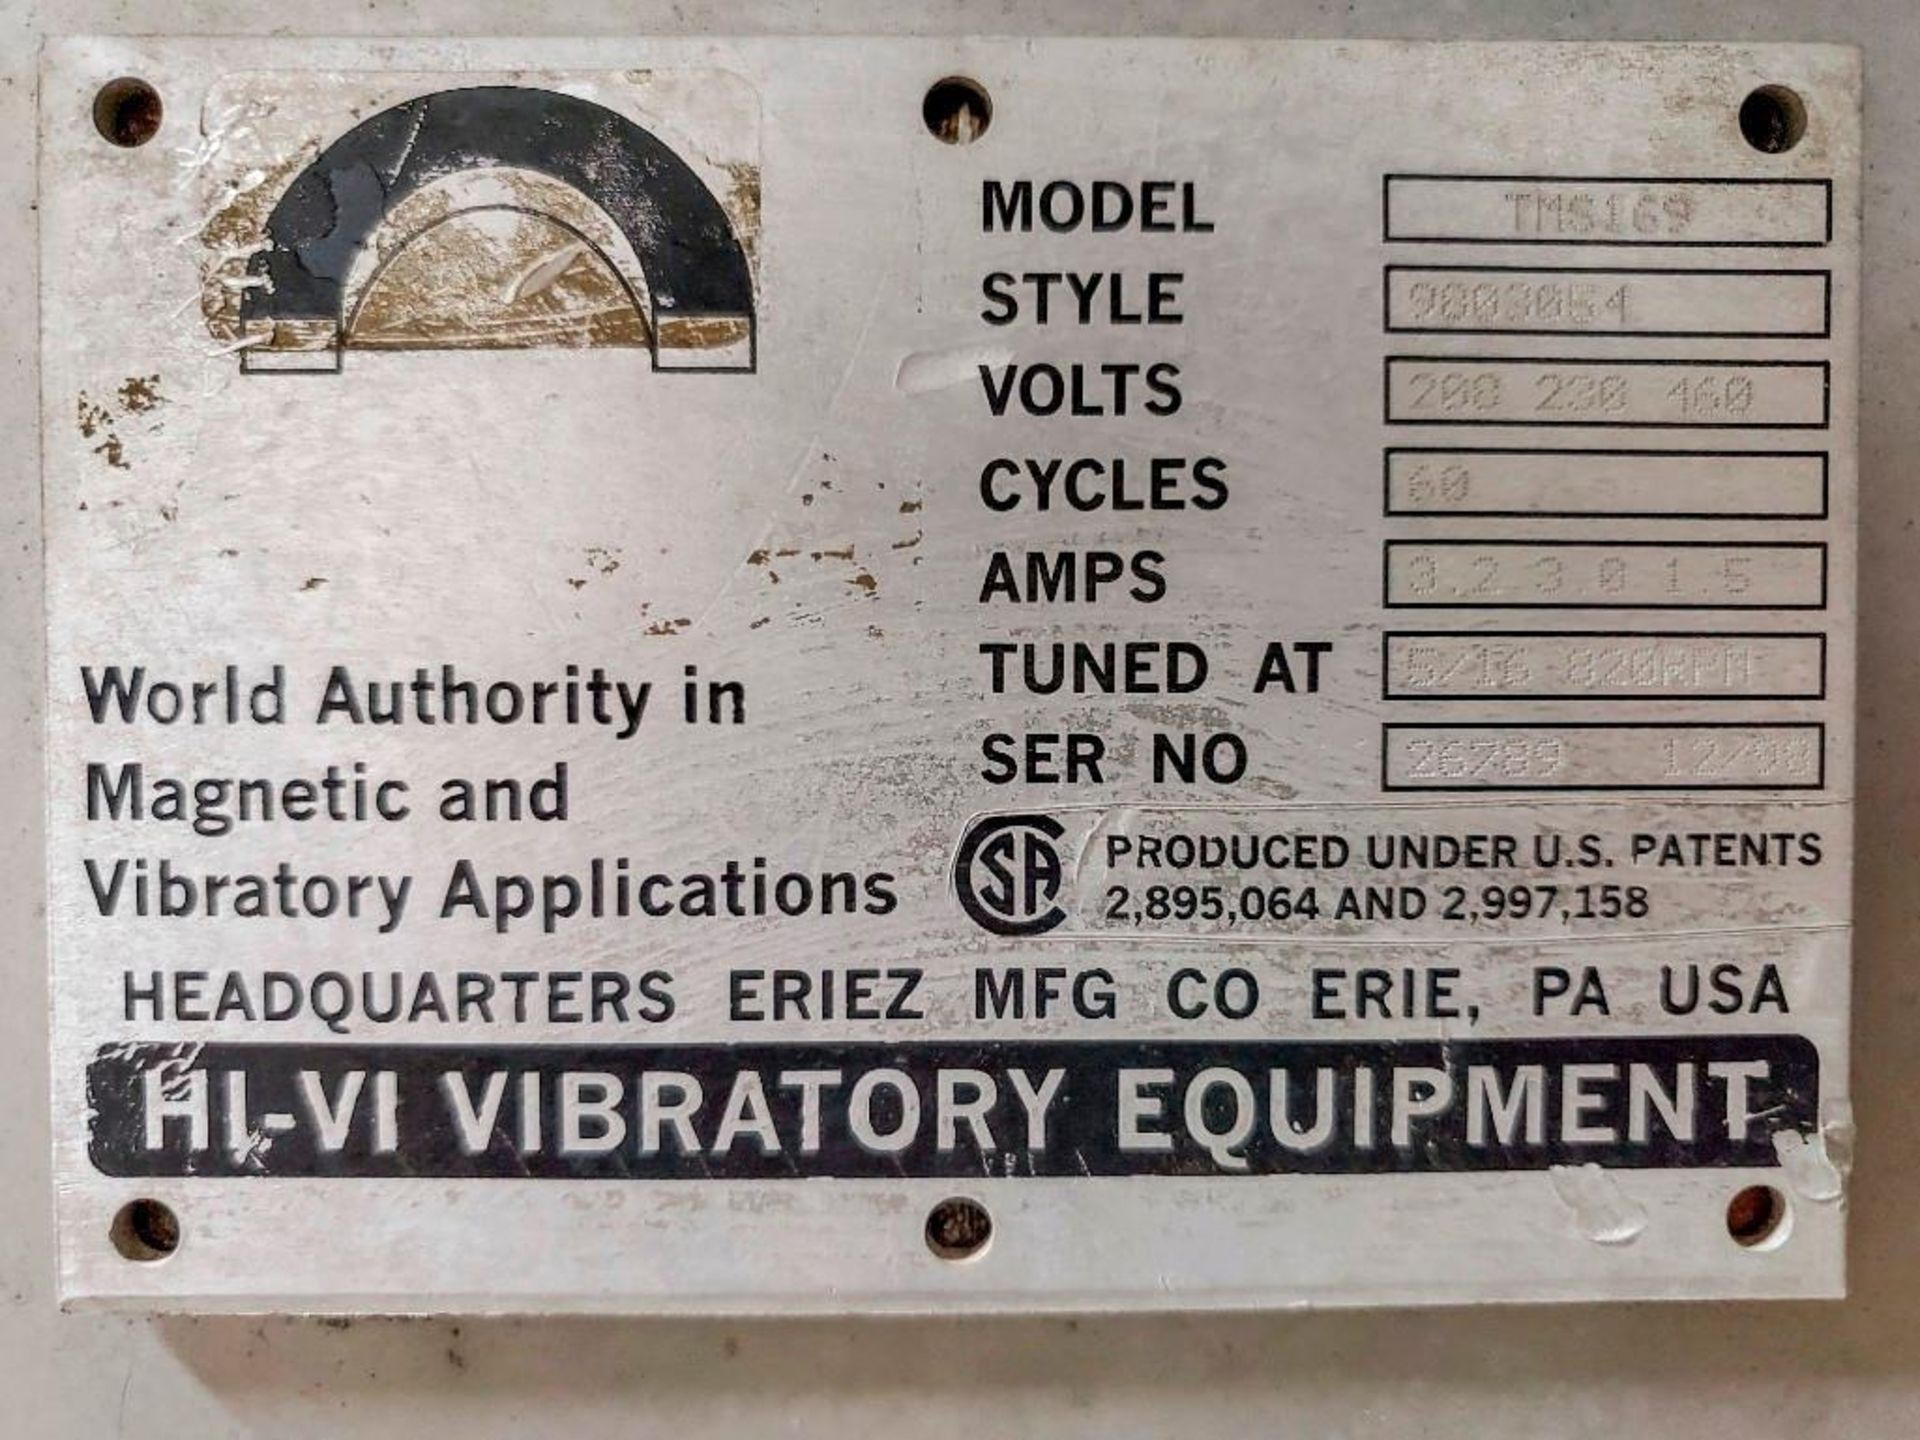 Vibratory Equipment - Image 2 of 2